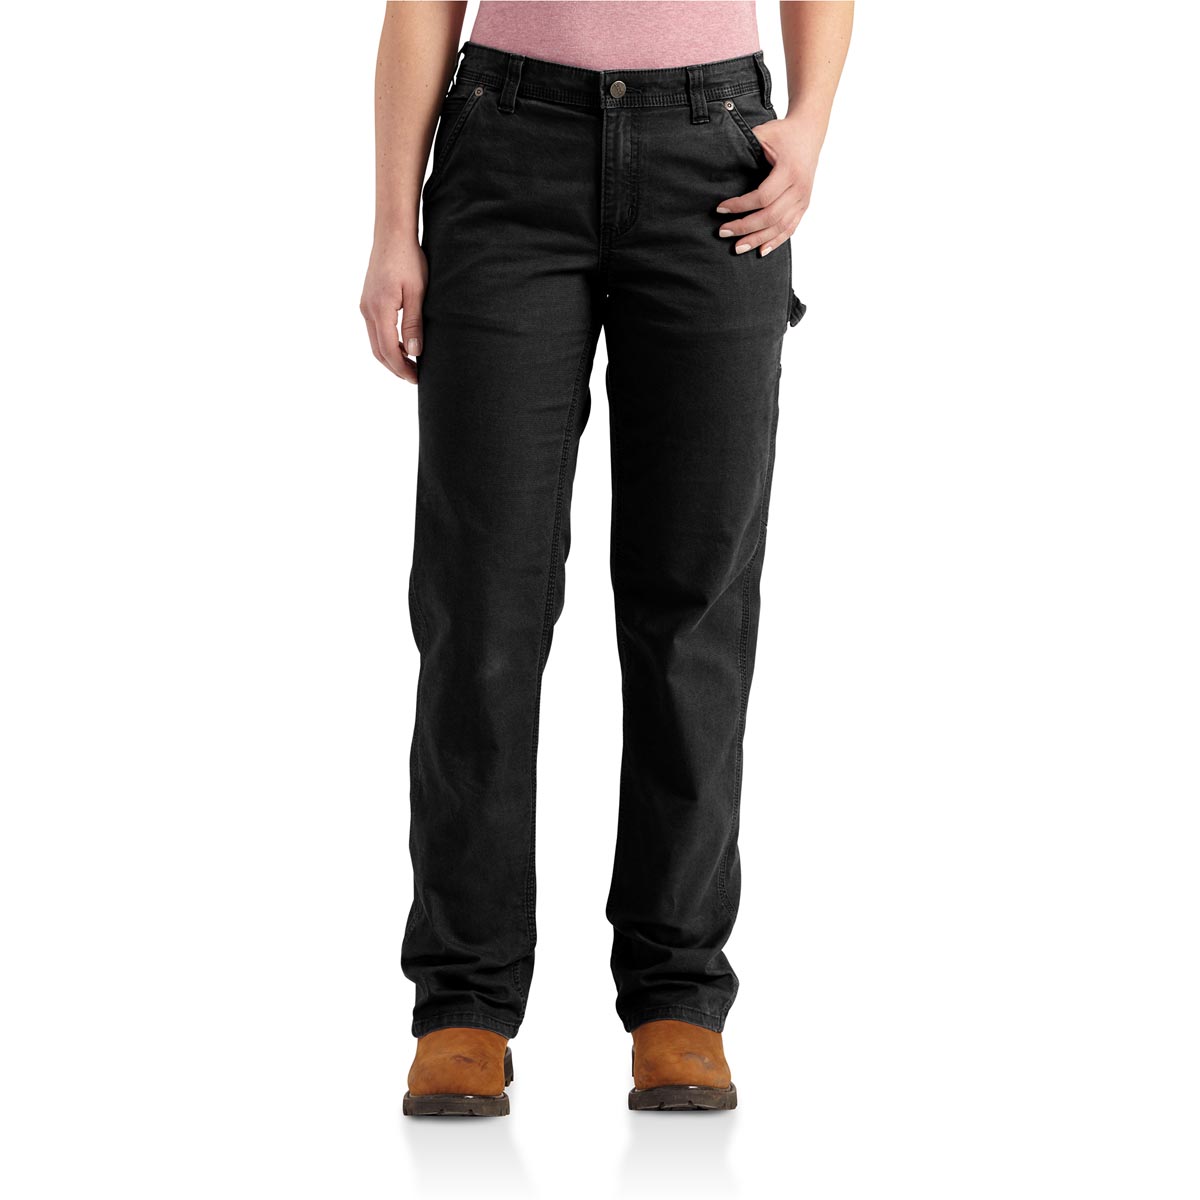 Dovetail WorkwearMaven Slim Pants, No Fade Denim, 30 Inseam - Womens